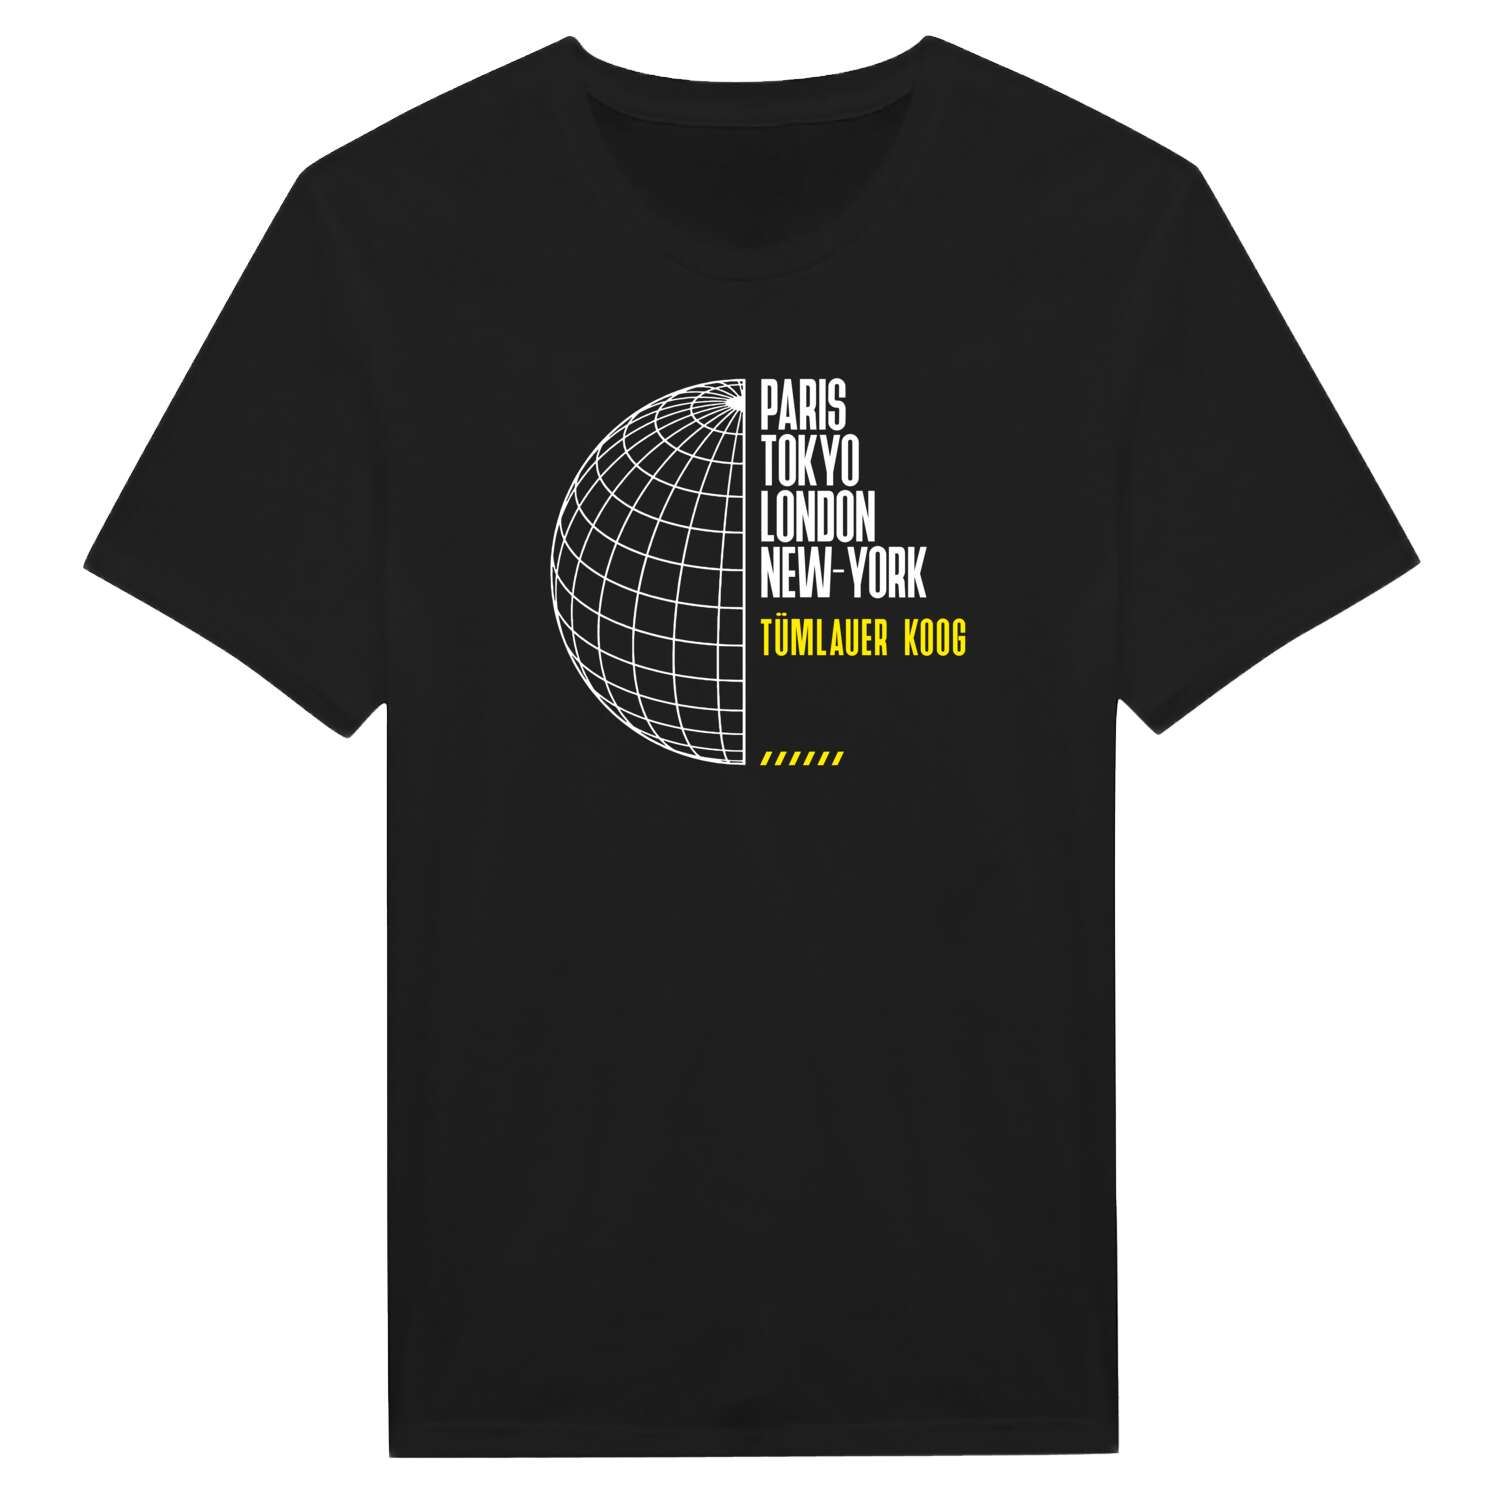 Tümlauer Koog T-Shirt »Paris Tokyo London«